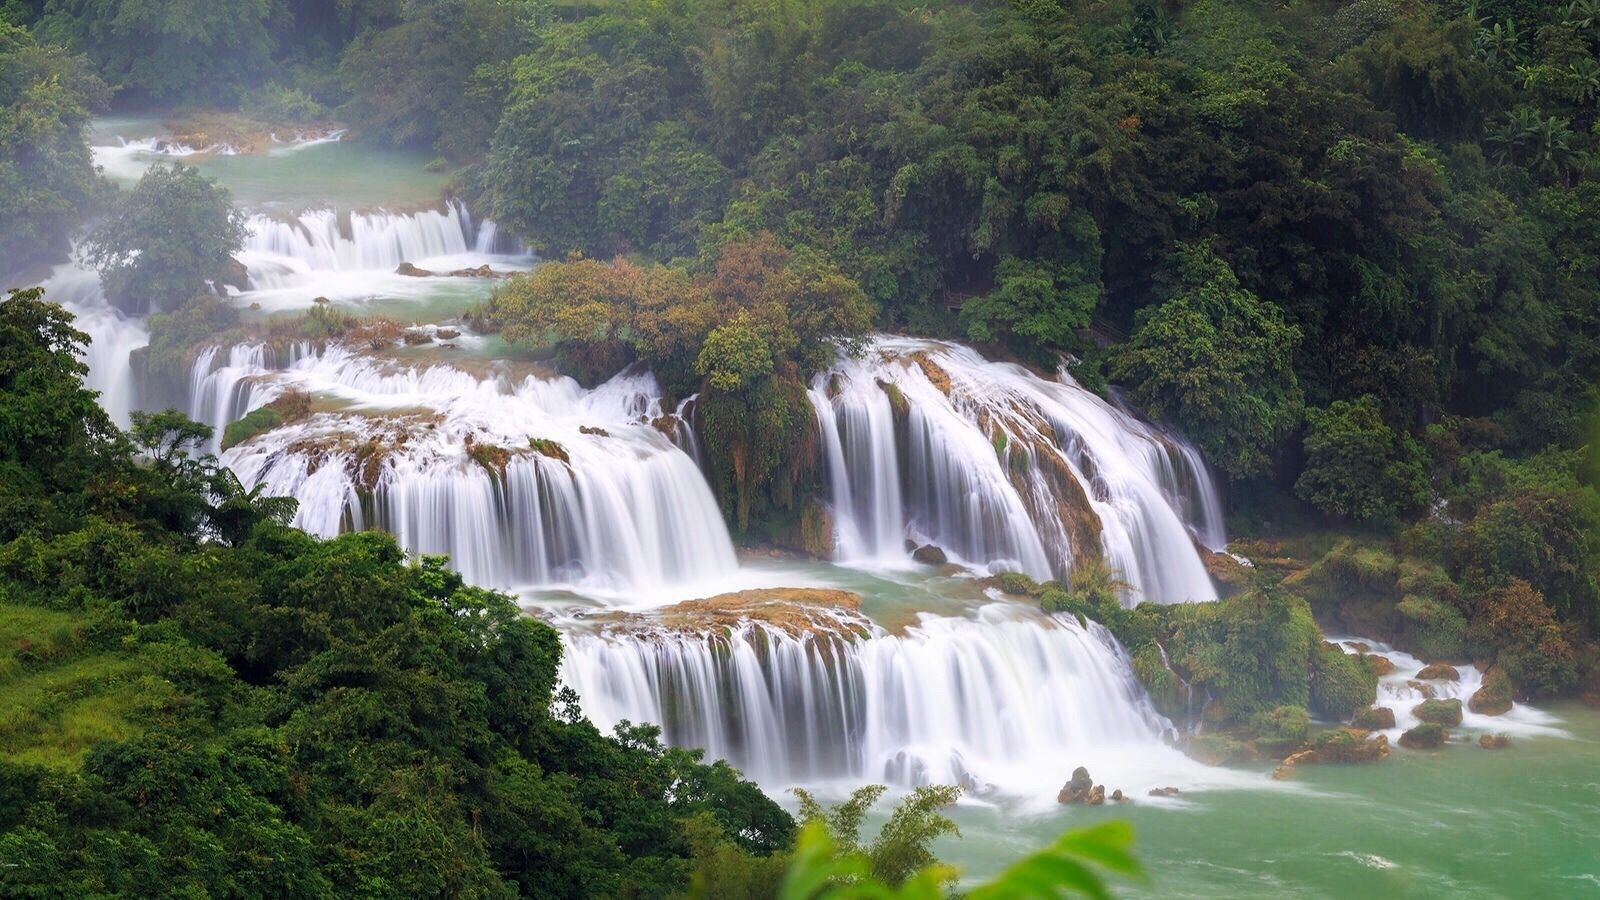 ban gioc waterfall pics